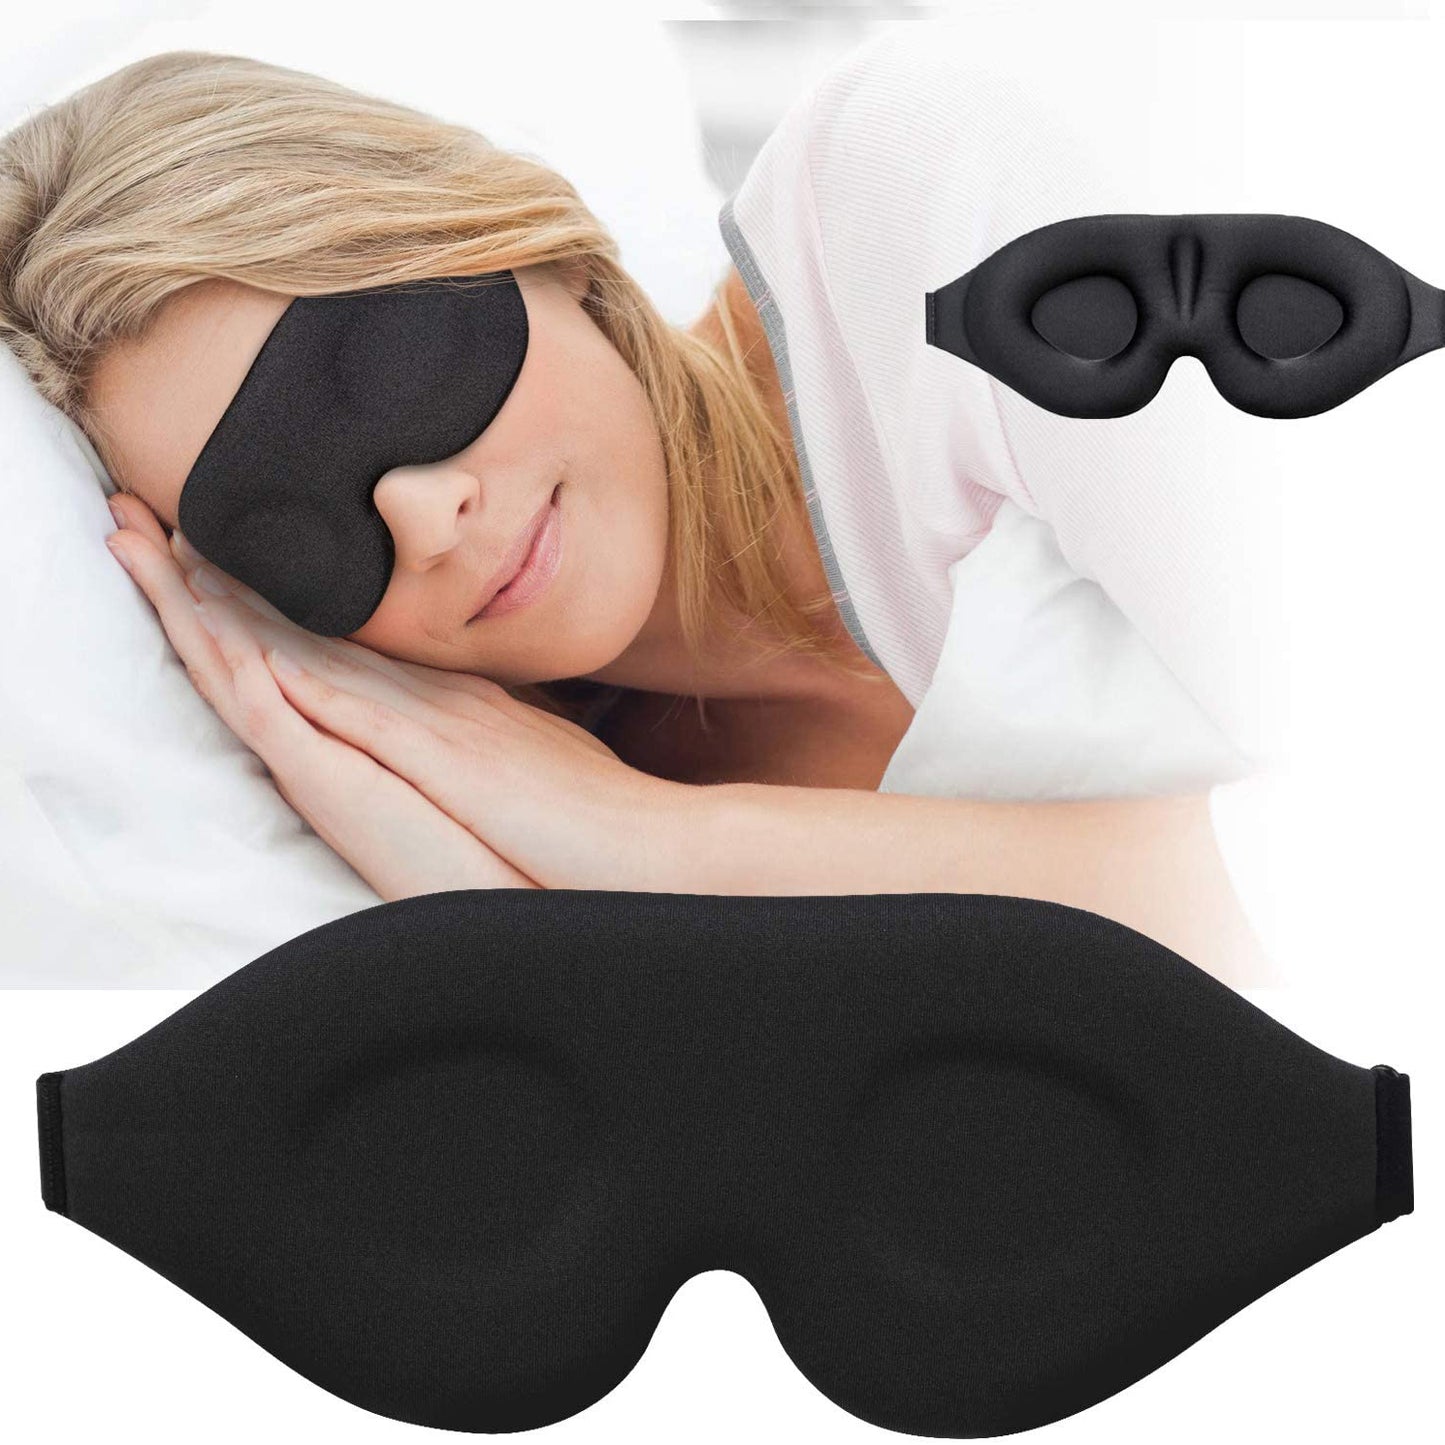 3D Sleep Mask, Sleeping Eye Mask for Women Men